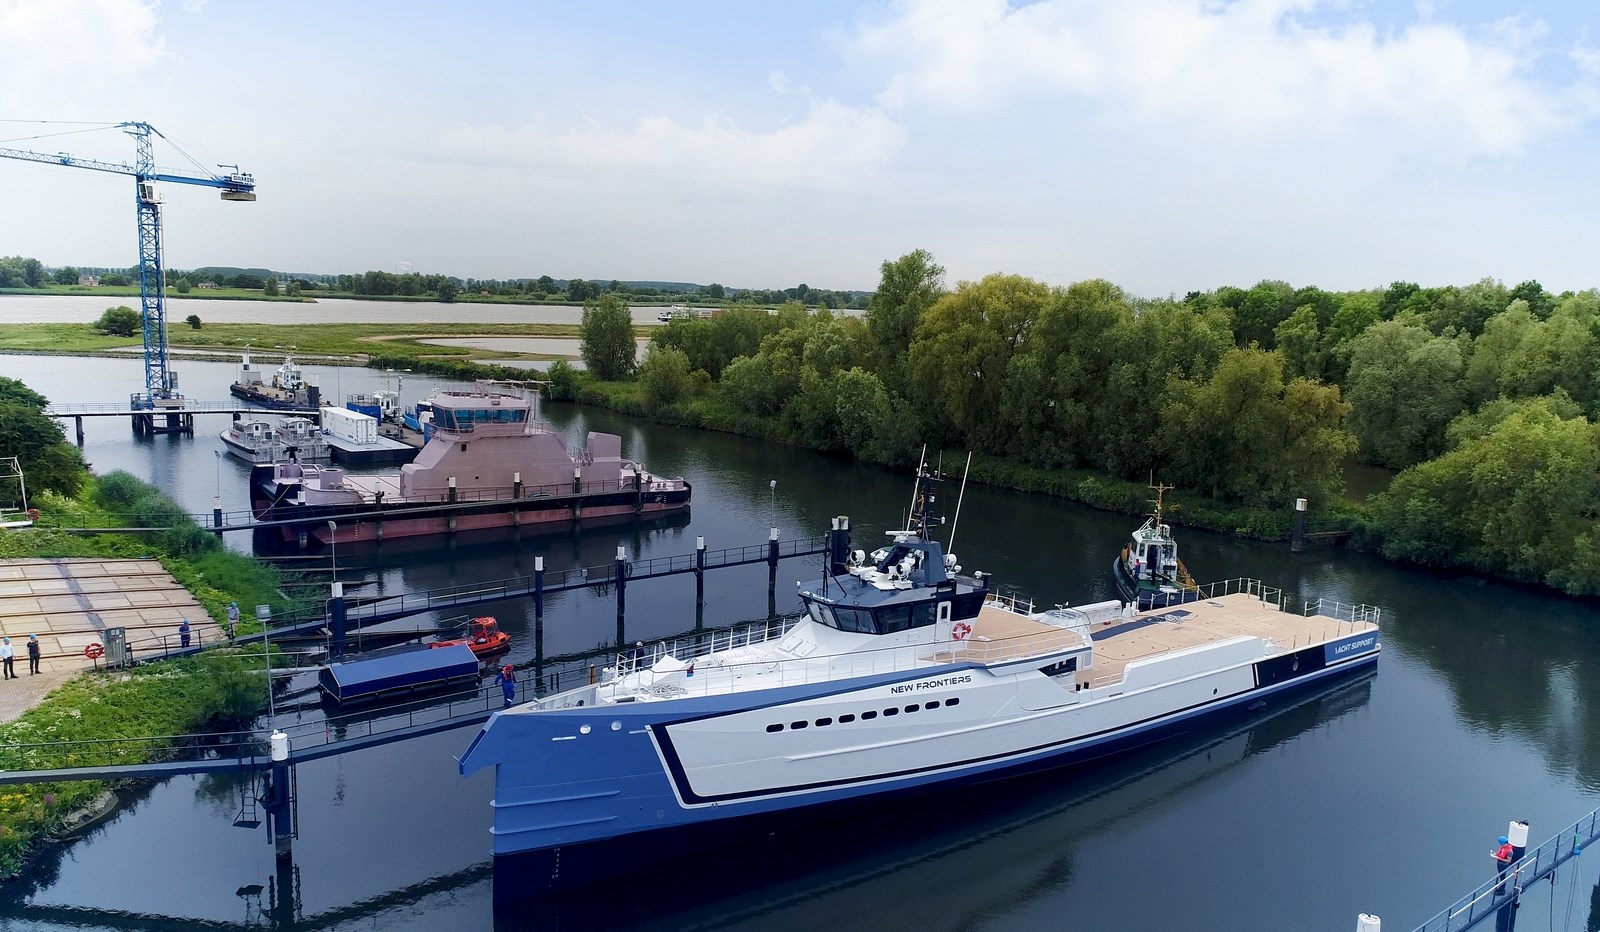 Damen Yacht Support Vessel New Frontiers